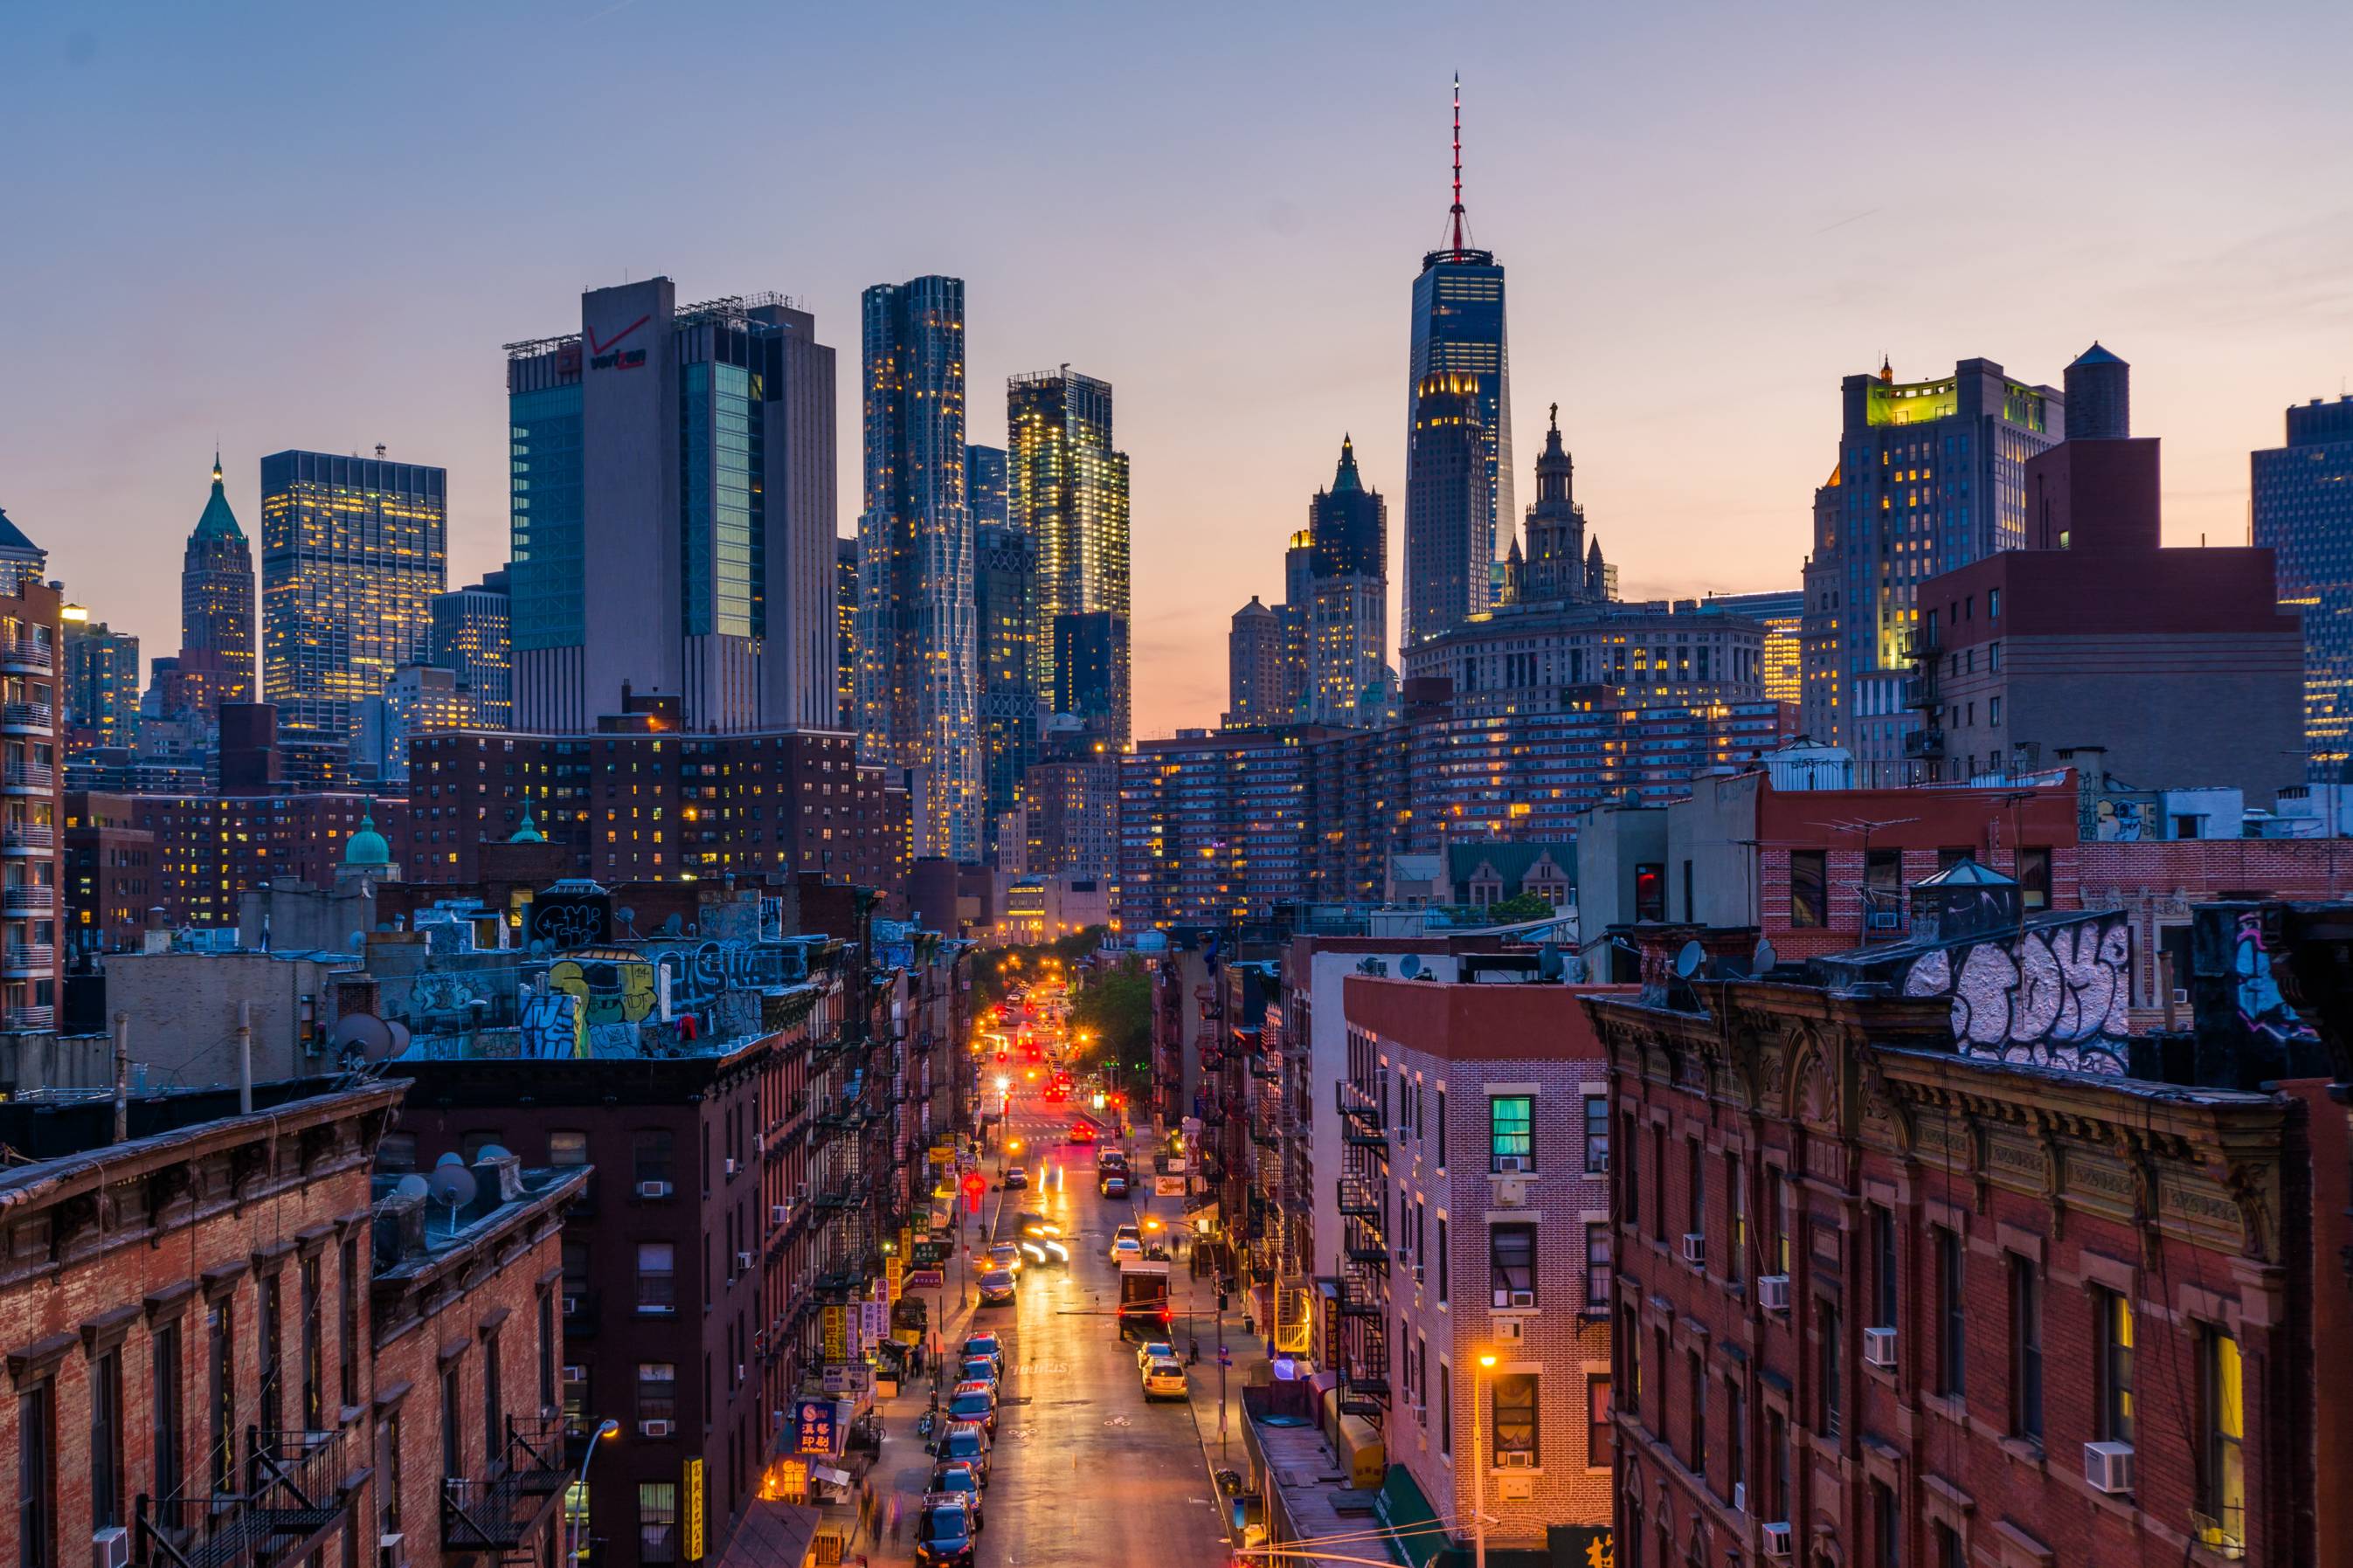 night view of new york city image